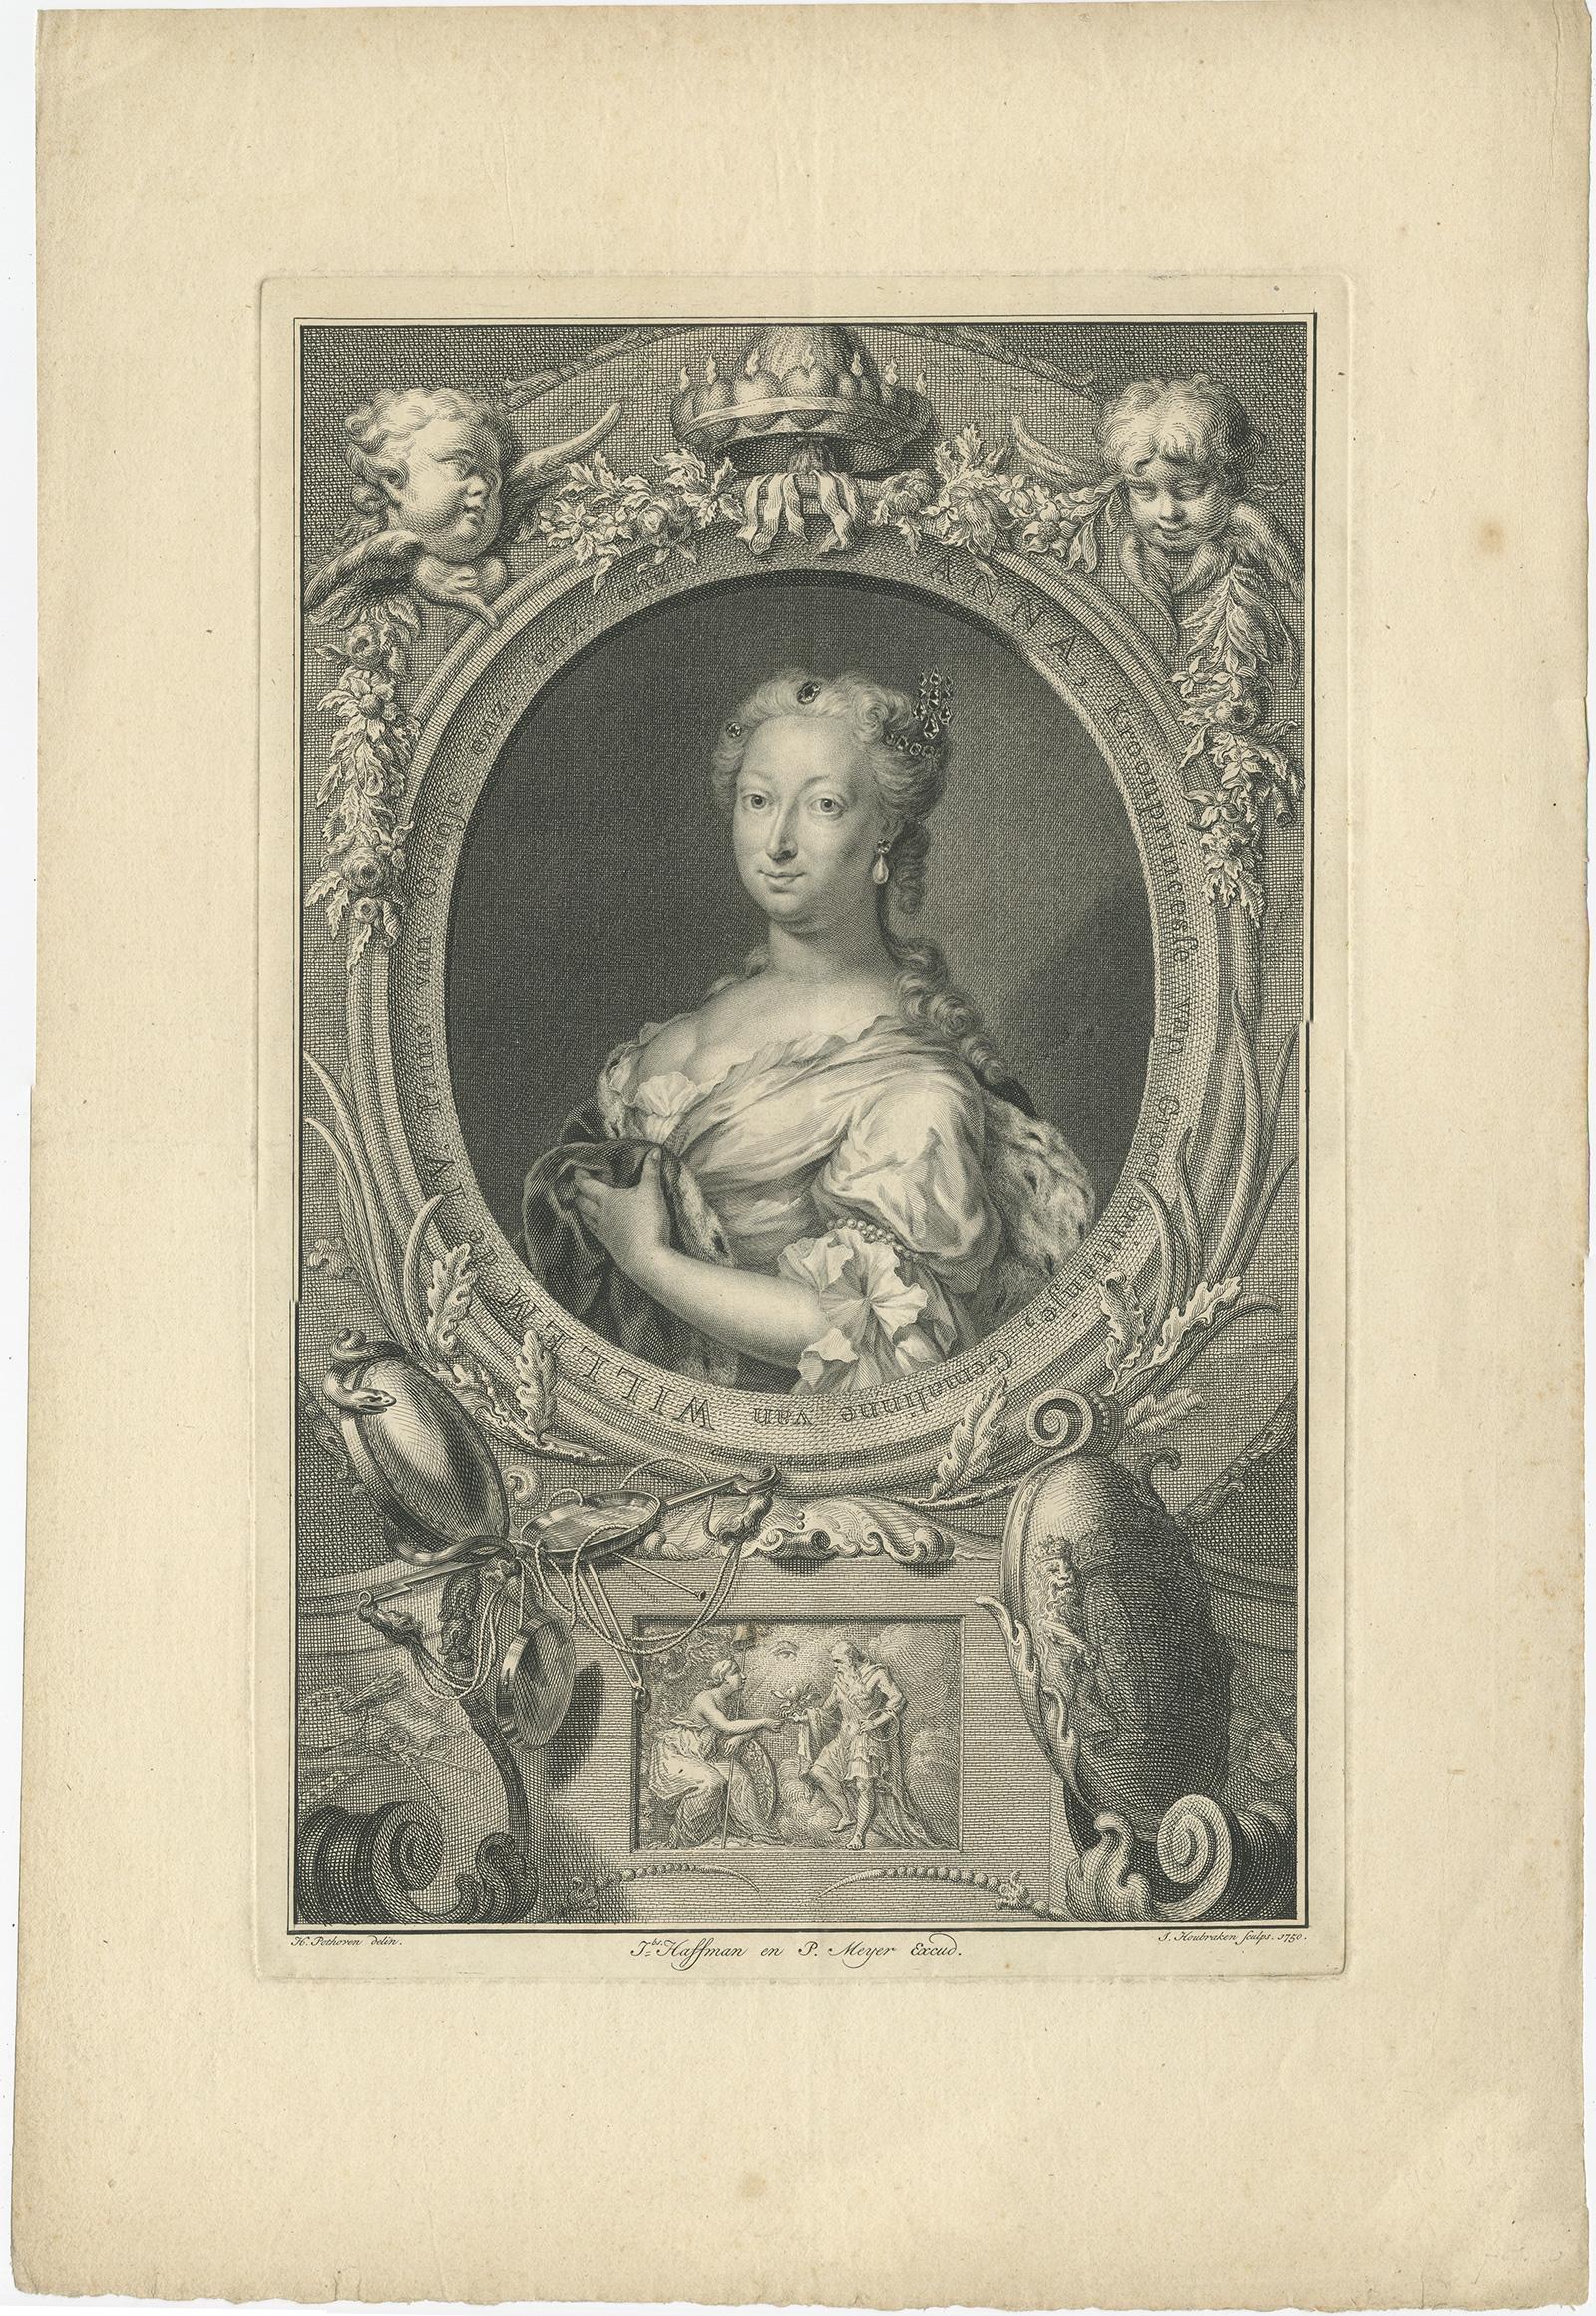 Antique portrait titled 'Anna, Kroonprinsesse van Grootbrittanje, Gemalinne van Willem de IV, Prins van Oranje'. 

Beautiful portrait of Anne, Princess Royal and Princess of Orange (1709-1759). Portrayed in an oval with allegorical symbolism